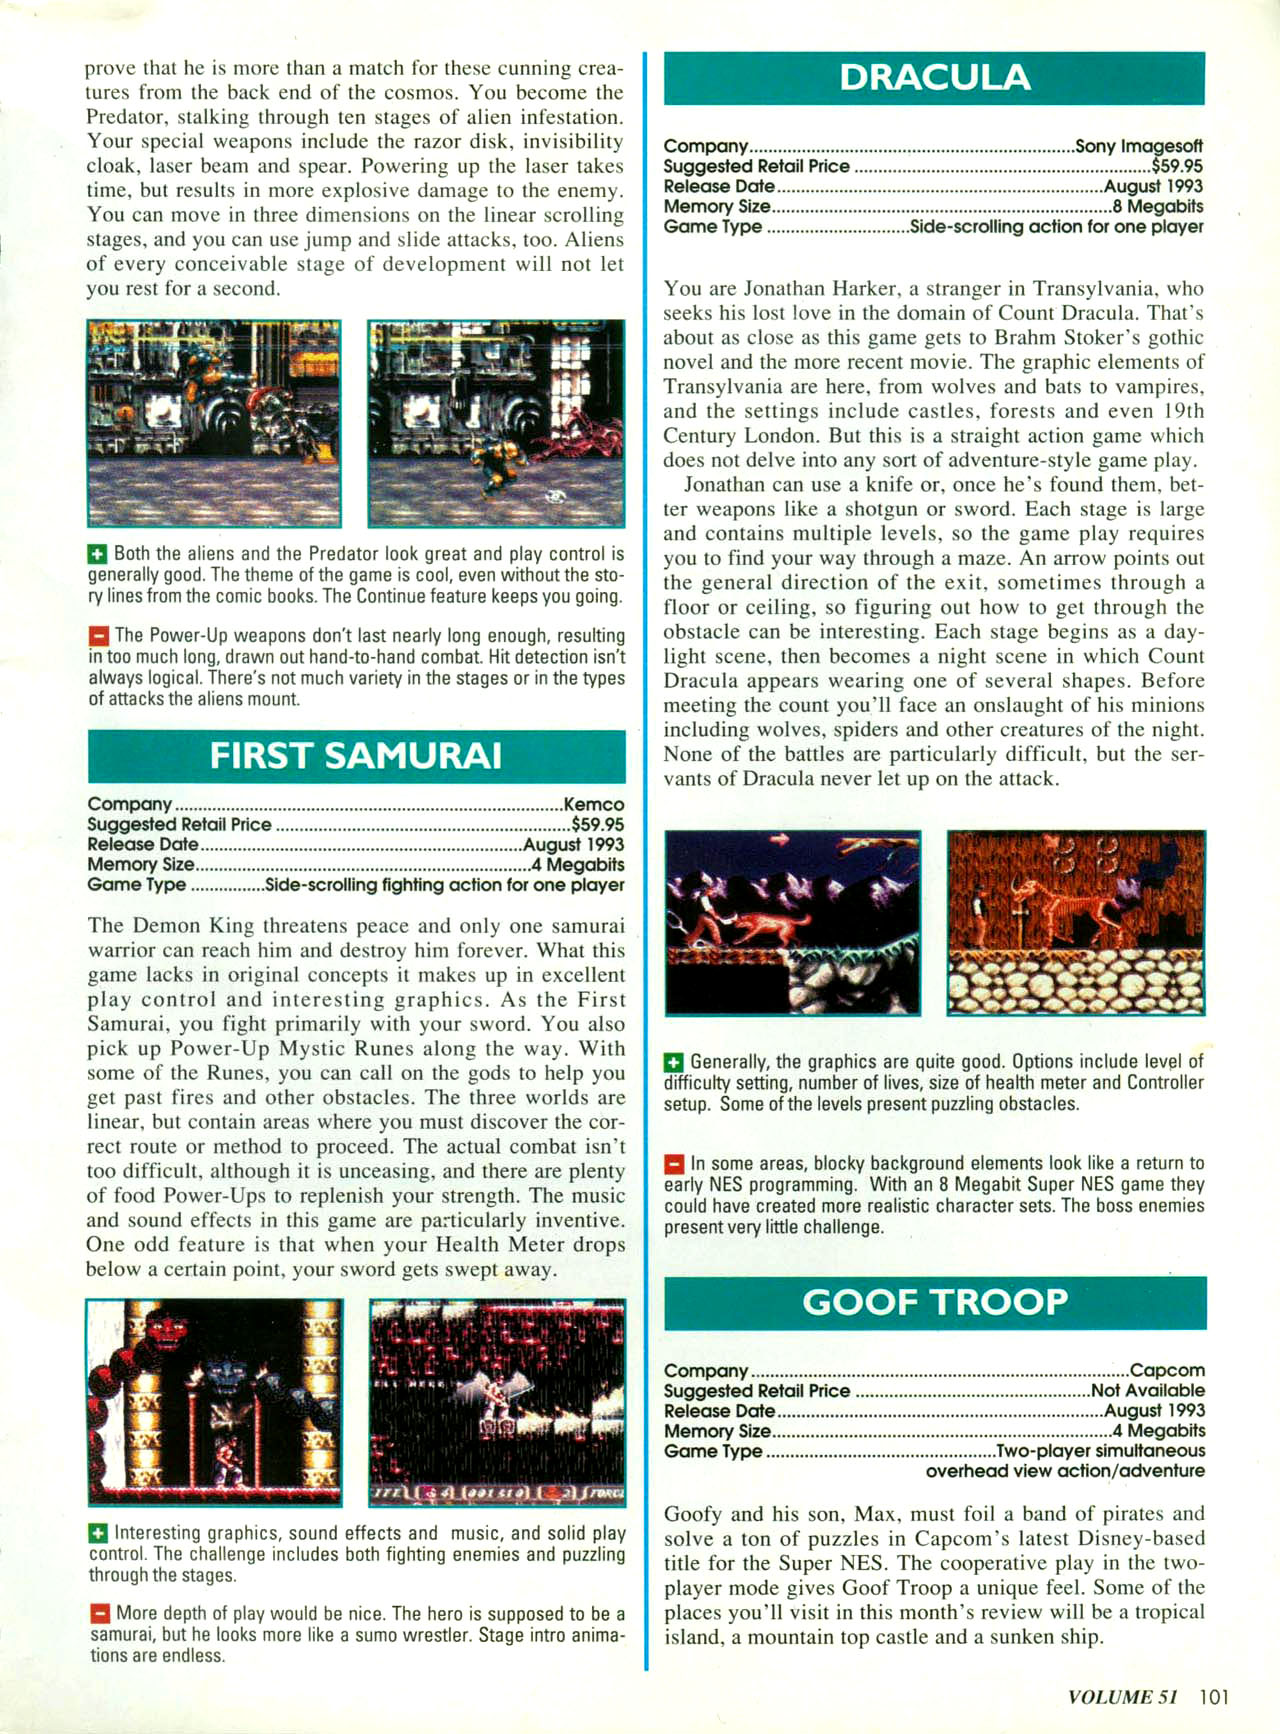 Read online Nintendo Power comic -  Issue #51 - 106